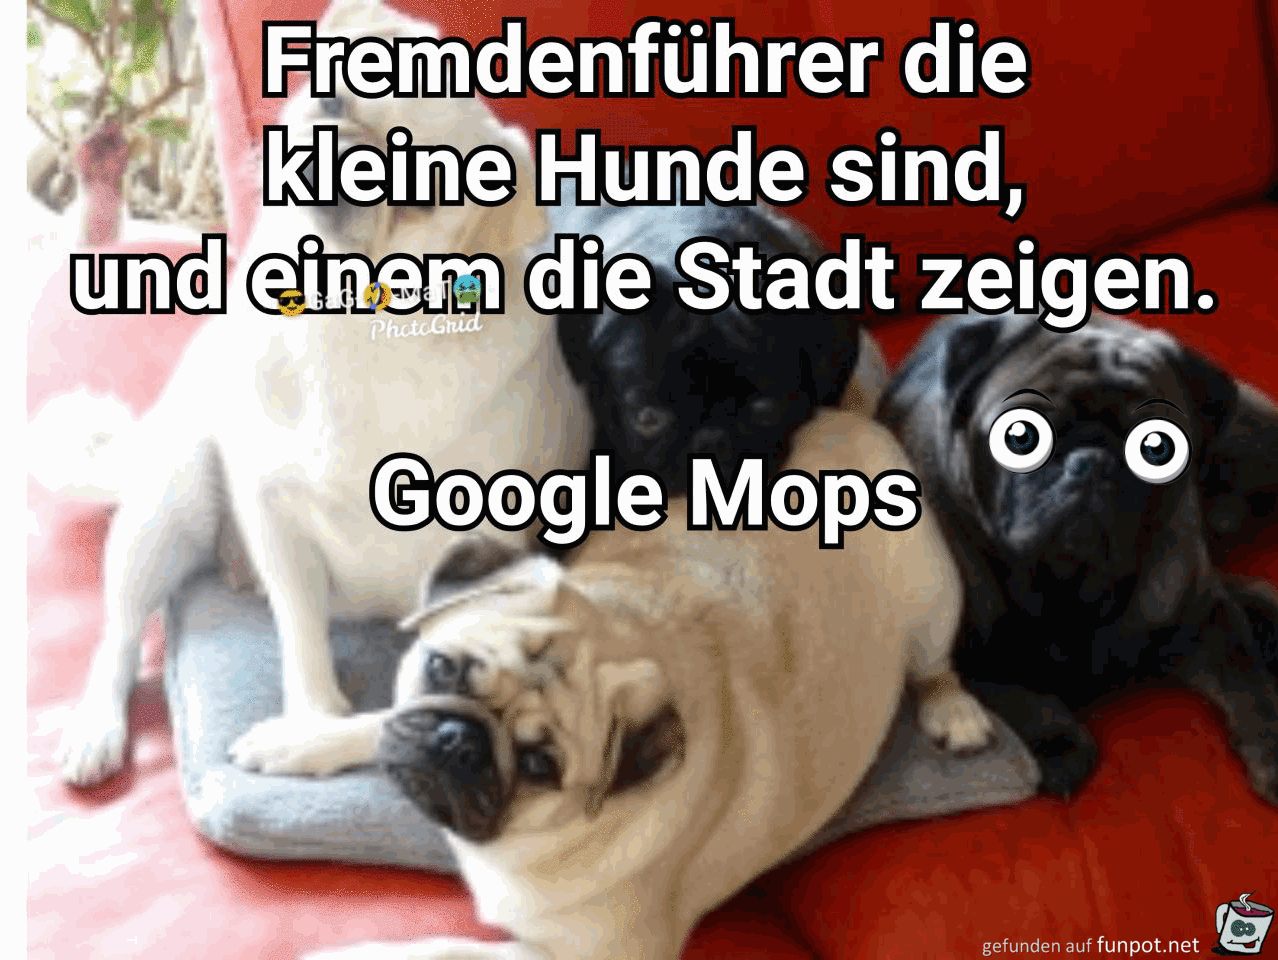 Google Mops